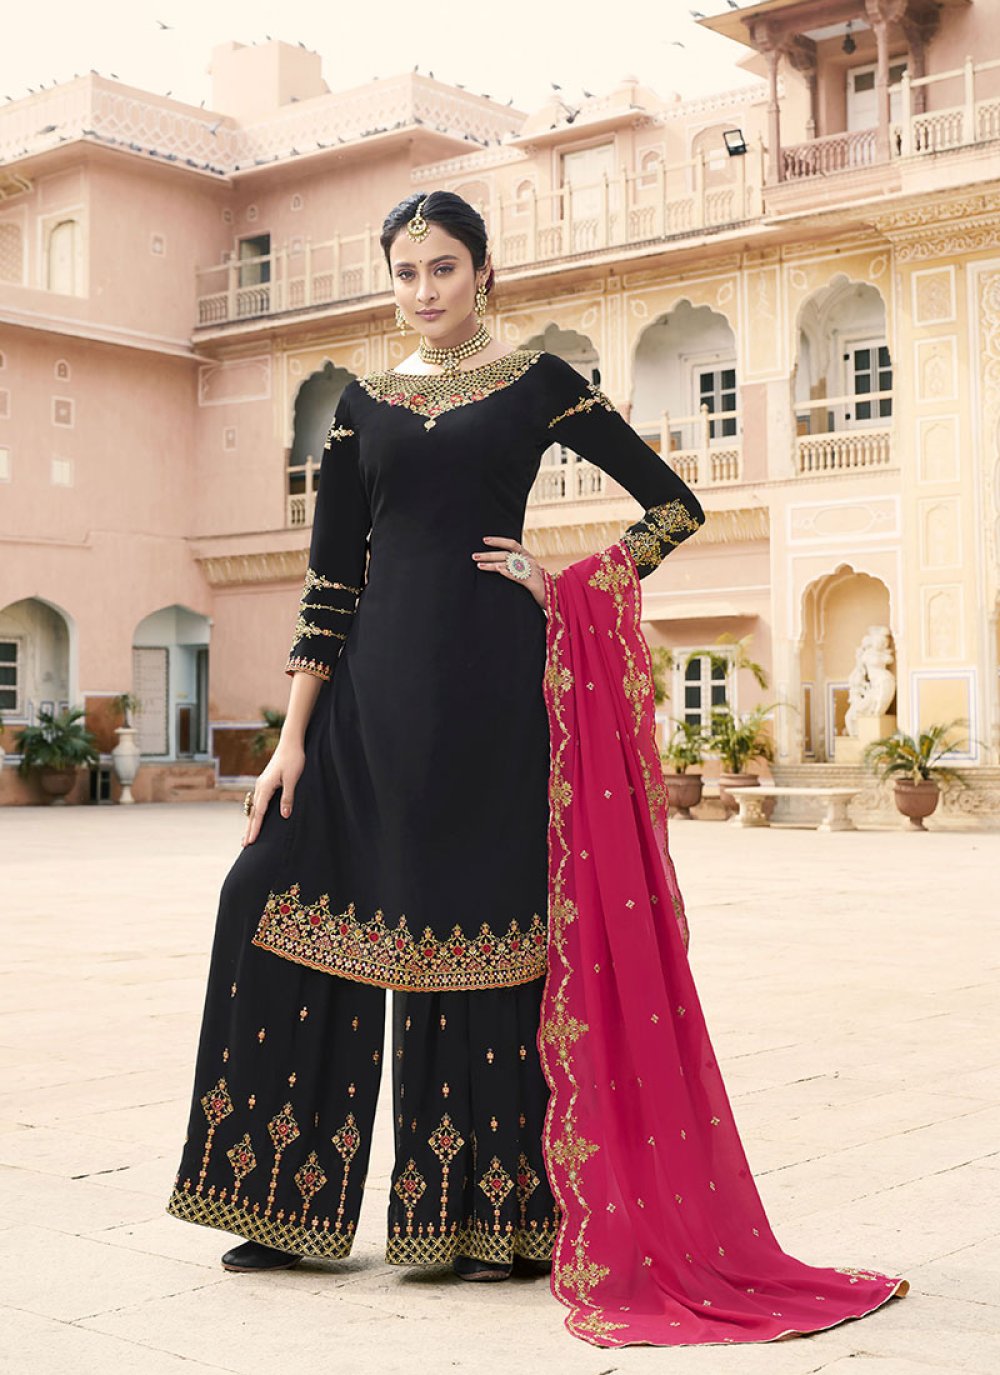 Sleeve Designs 2020 With Pearl,Lace,Button,Frill By Fashion TrendZila |  Crochet girls dress pattern, New dress design indian, Pakistani fashion  party wear